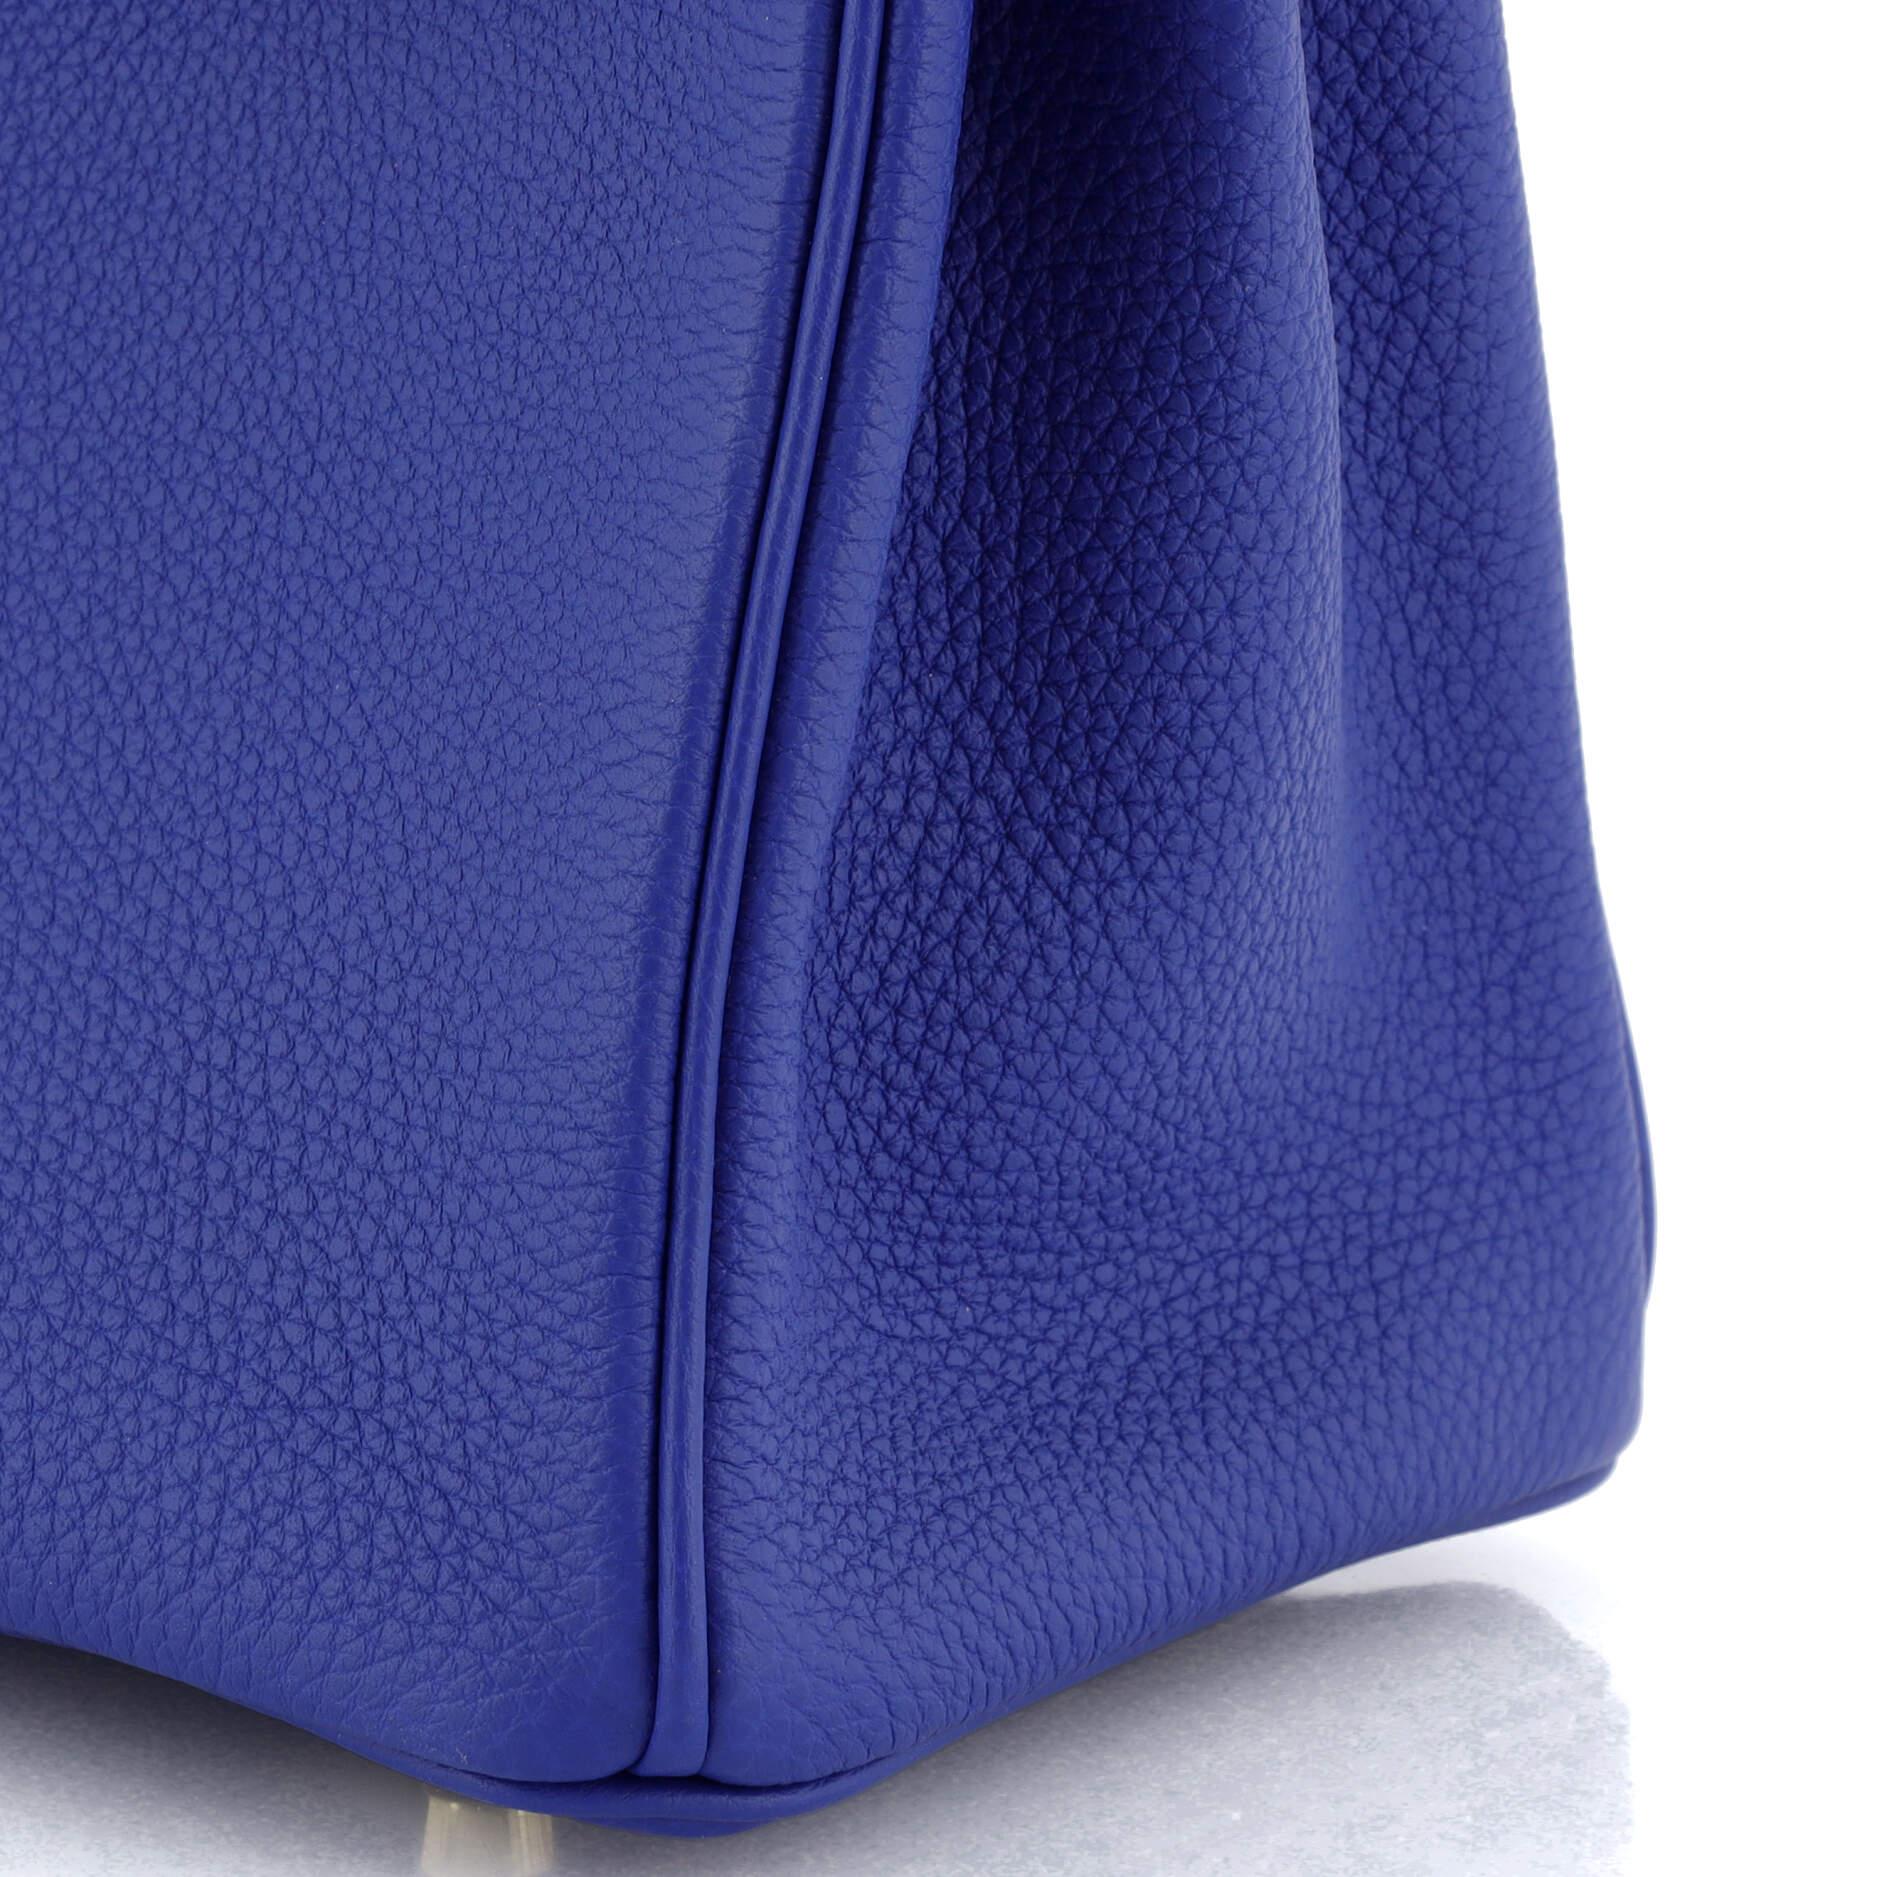 Hermes Birkin Handbag Bleu Royal Togo with Gold Hardware 25 4